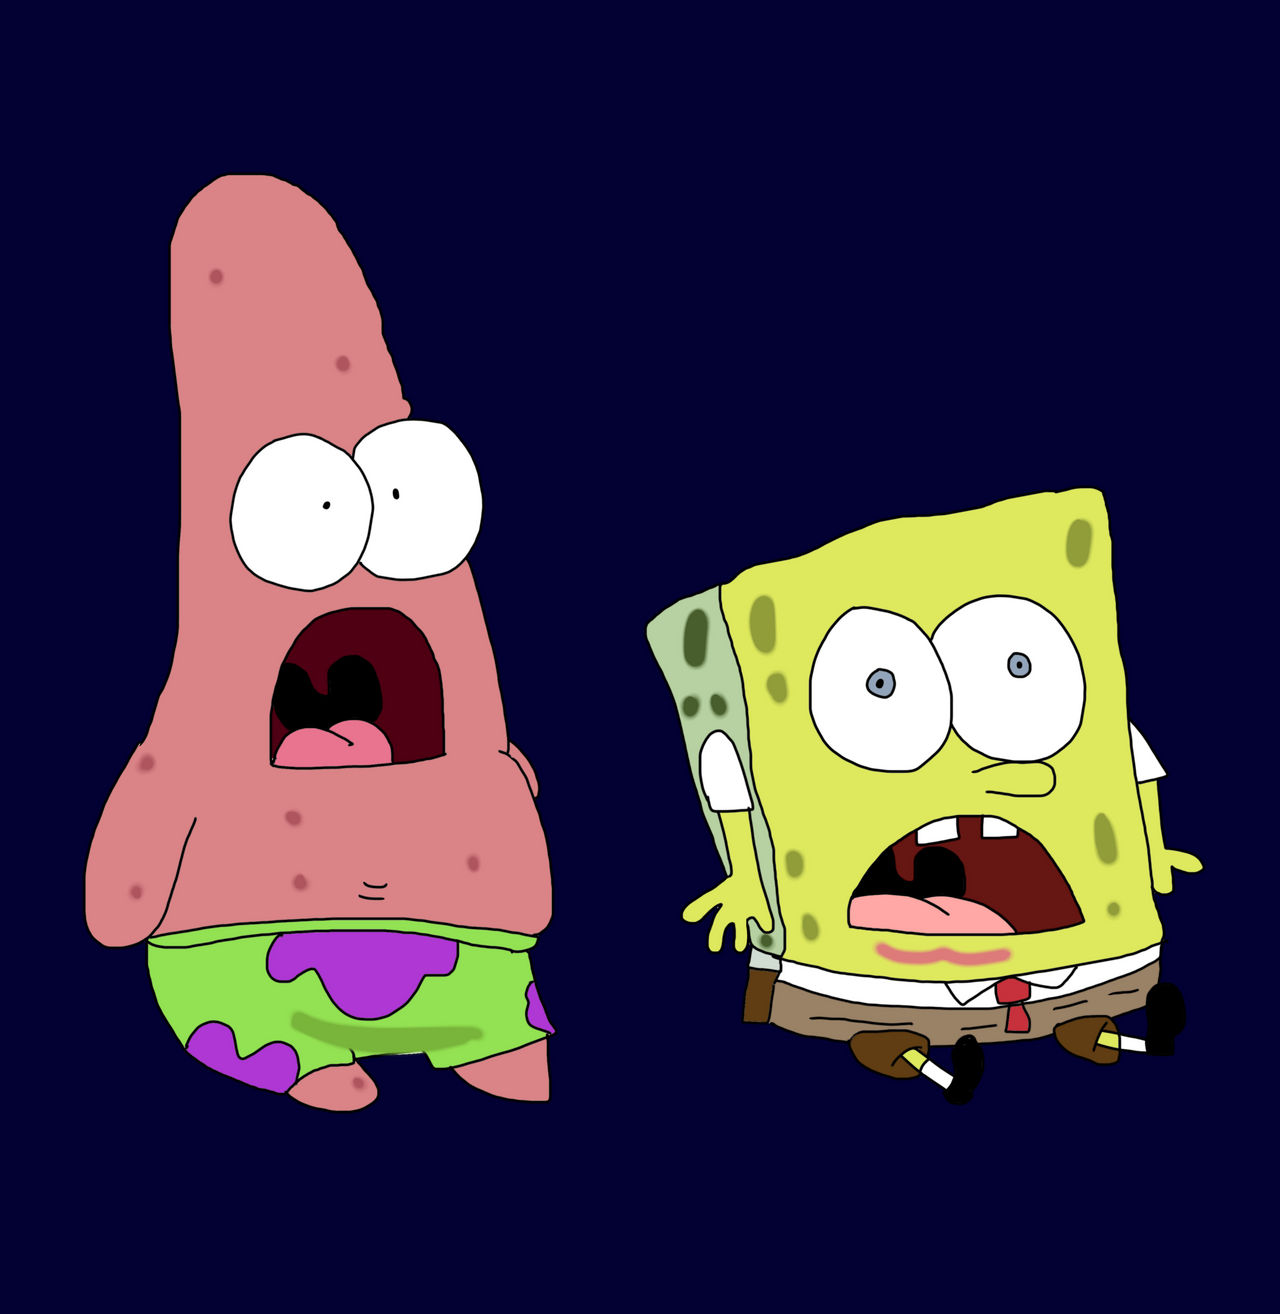 Surprised Spongebob And Patrick By Doodlebobthedrawing On Deviantart